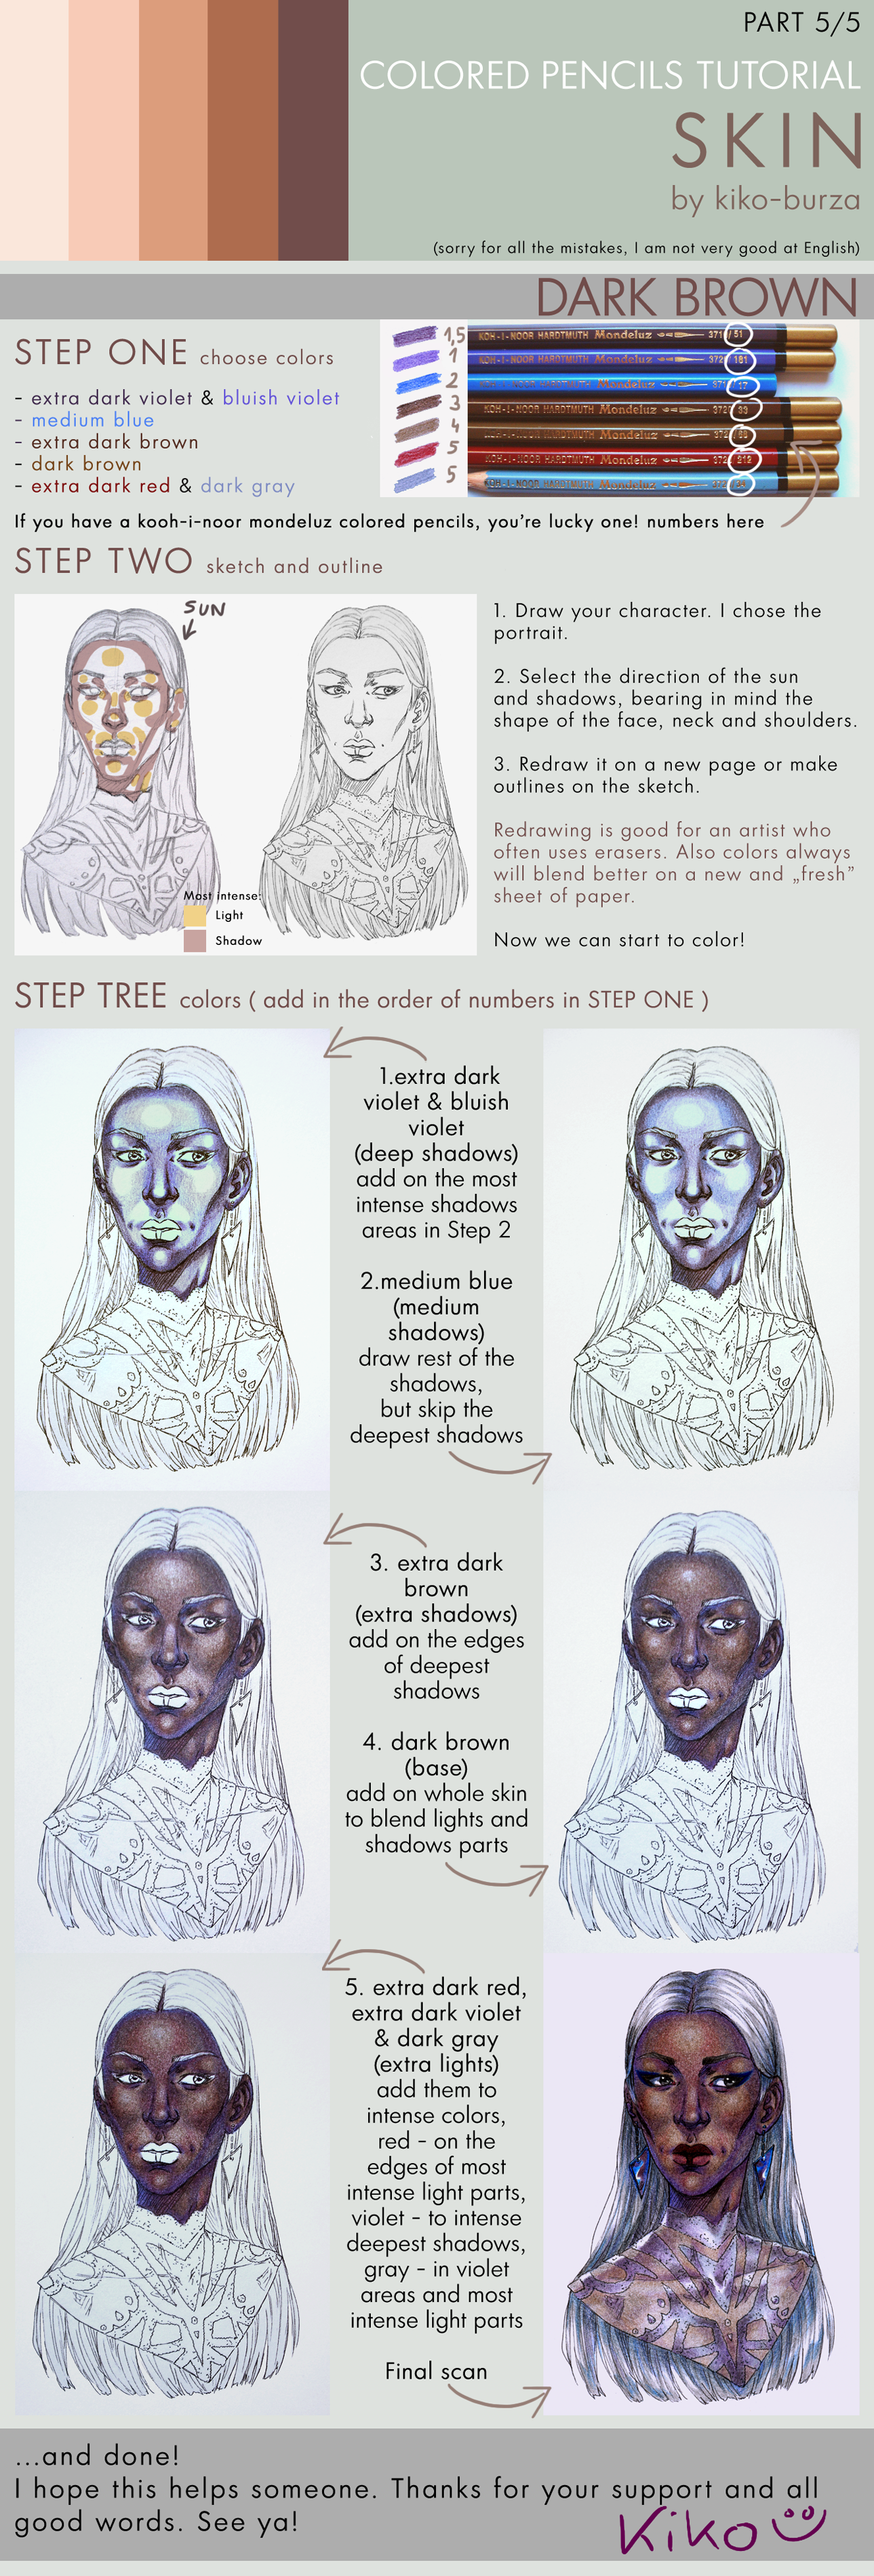 Colored pencil tutorial SKIN part 4 - MEDIUM BROWN by kiko-sempai on  DeviantArt